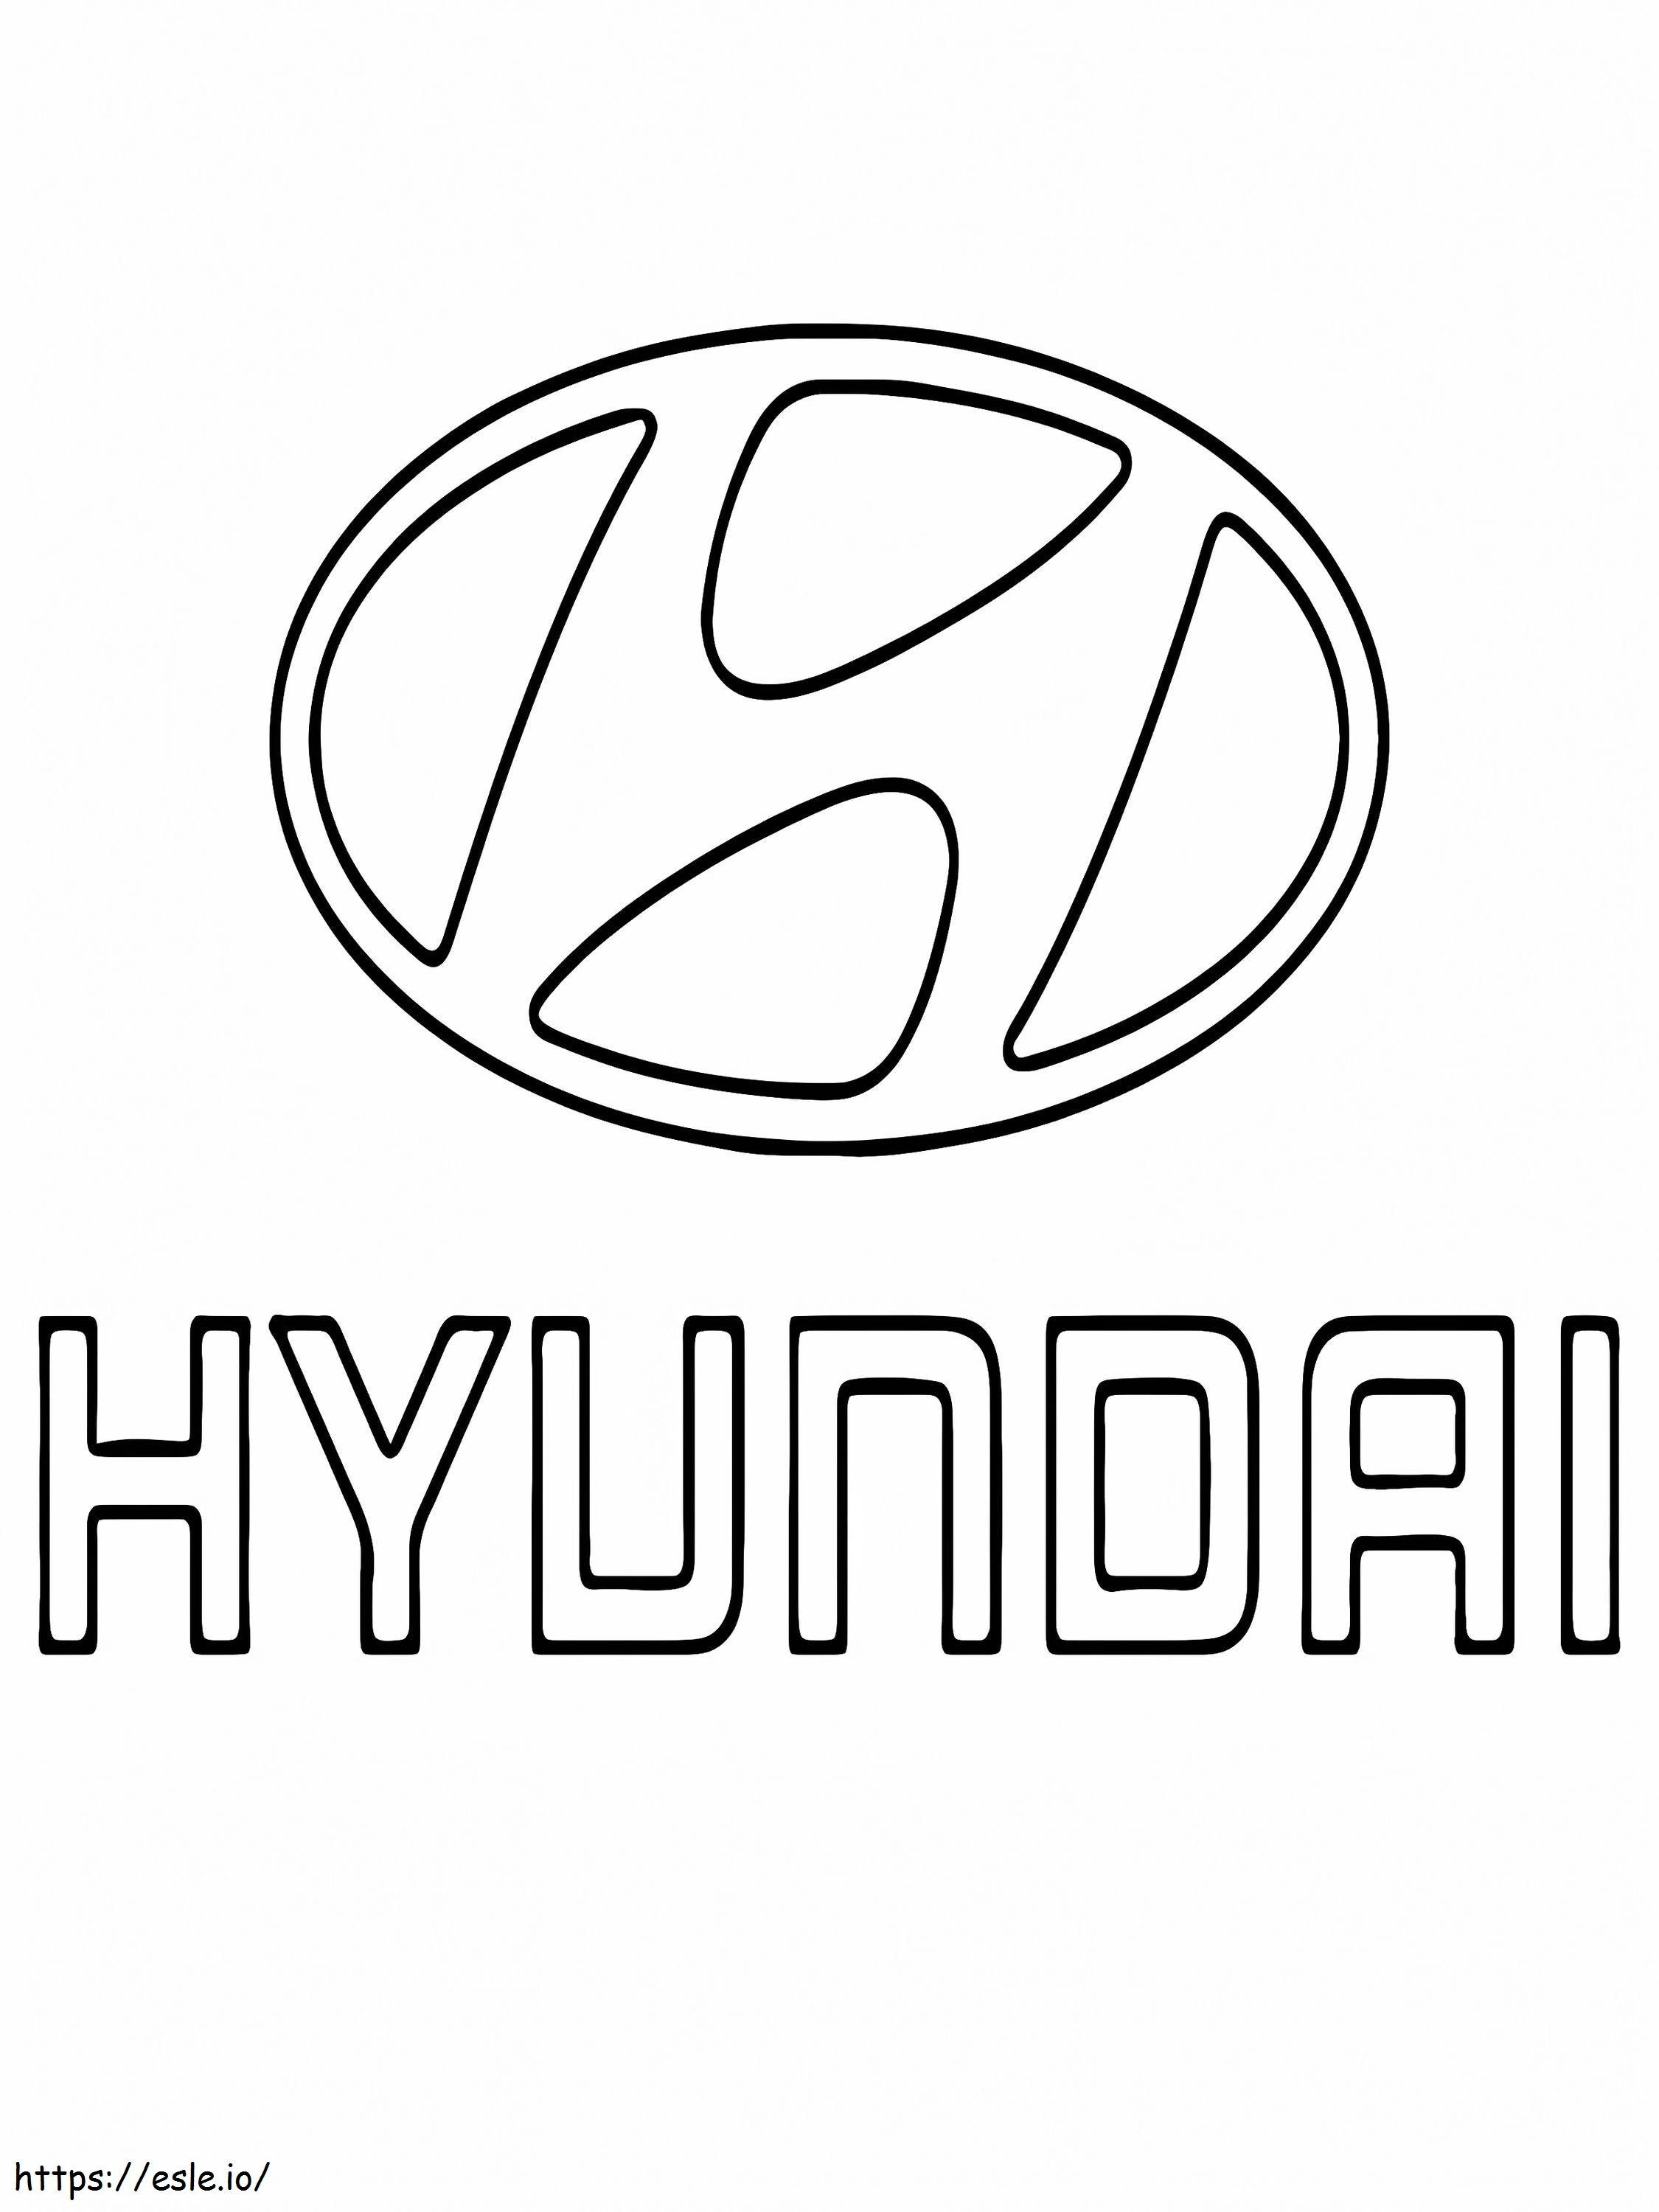 Hyundai auton logo värityskuva